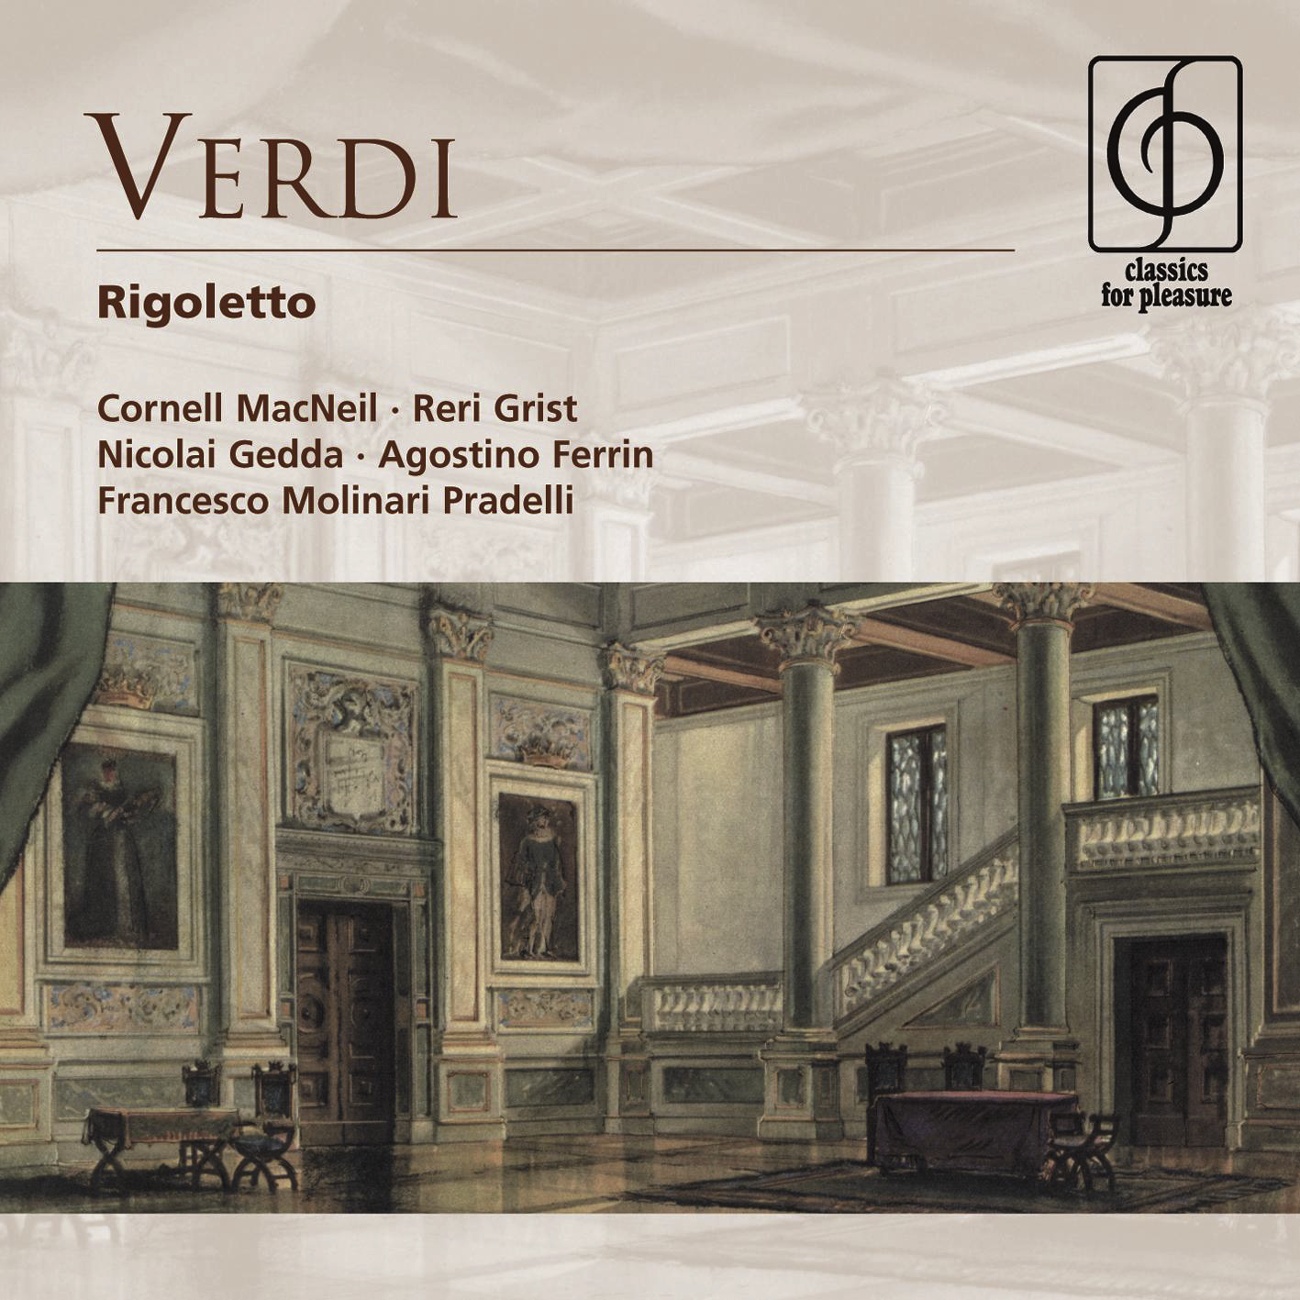 Rigoletto [Act I] (1988 Digital Remaster): Giovanna, ho dei rimorsi (Gilda, Giovanna, Duke)